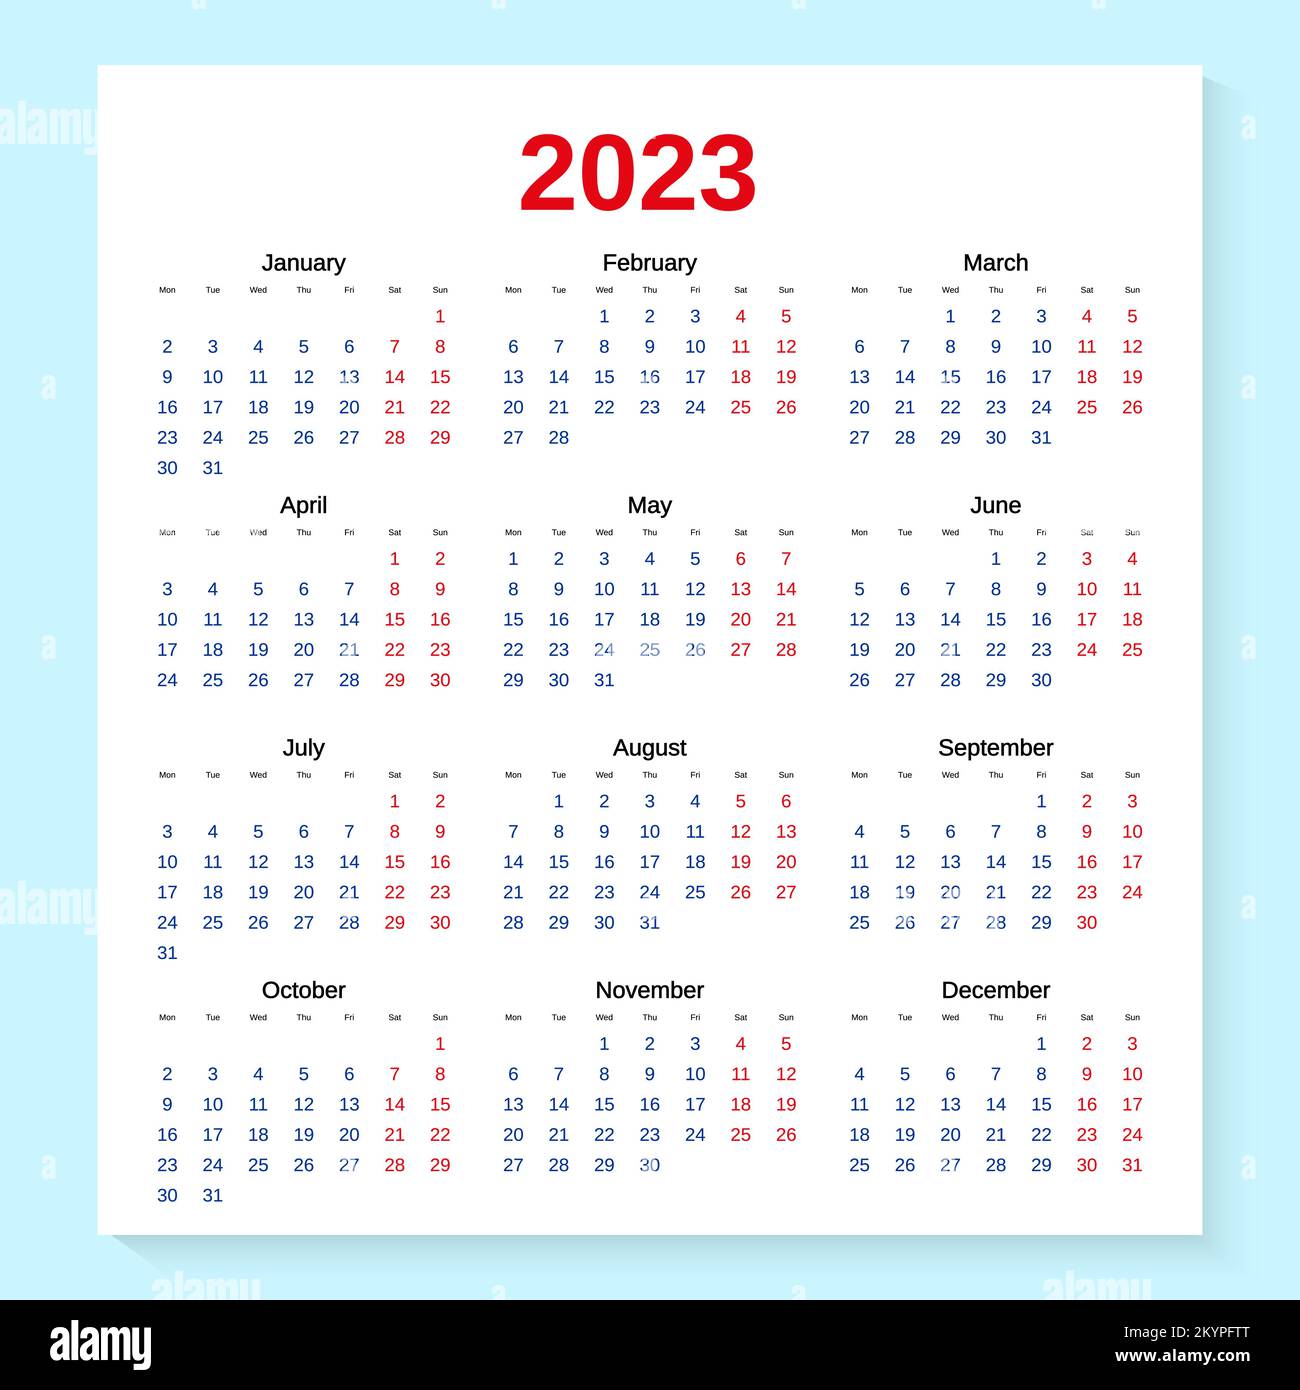 2023 annual calendar. Vector illustration Stock Vector